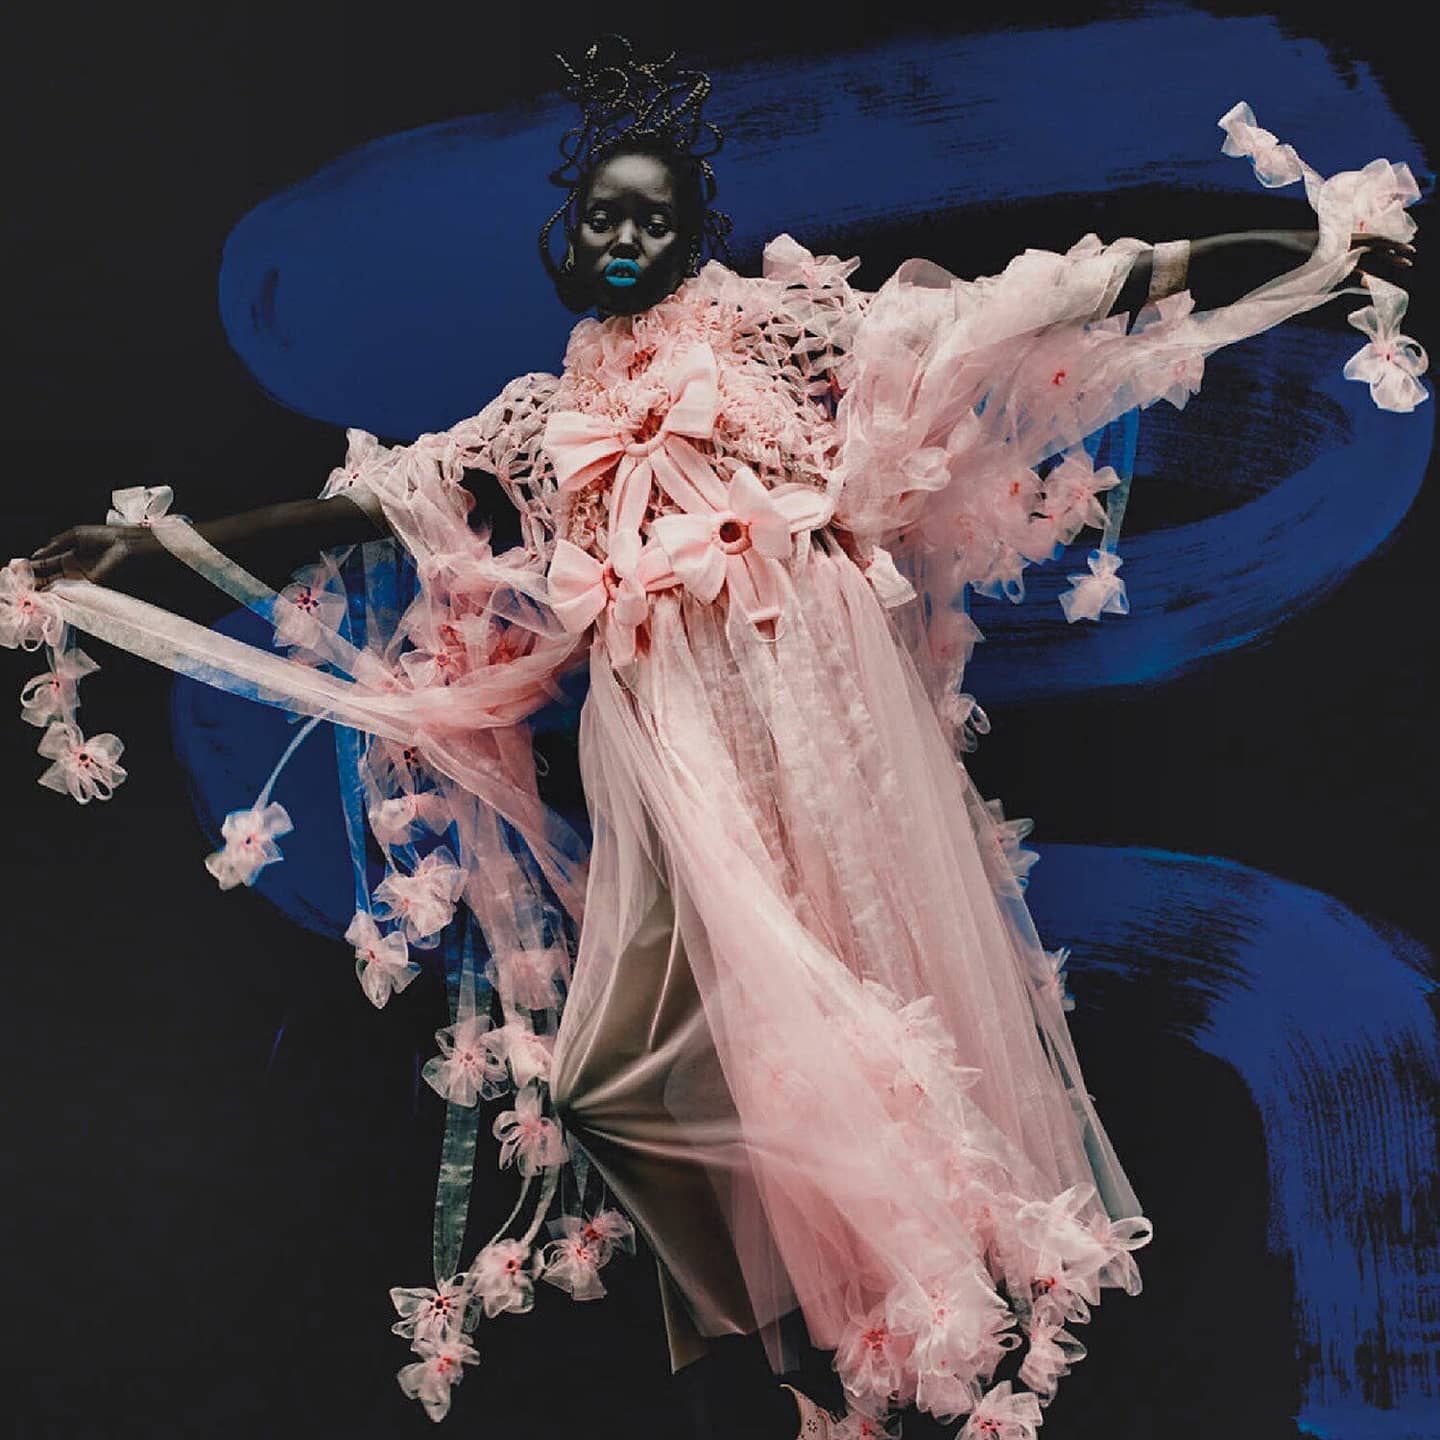 Vogue UK February 2021: Rafael Pavarotti photographs ‘Brand New Ancients’ featuring Nor Kei Ninomiya. Stylist Kate Phelan; Set designer Gary Card; hair by Eugene Souleiman; makeup by Lauren Parsons.